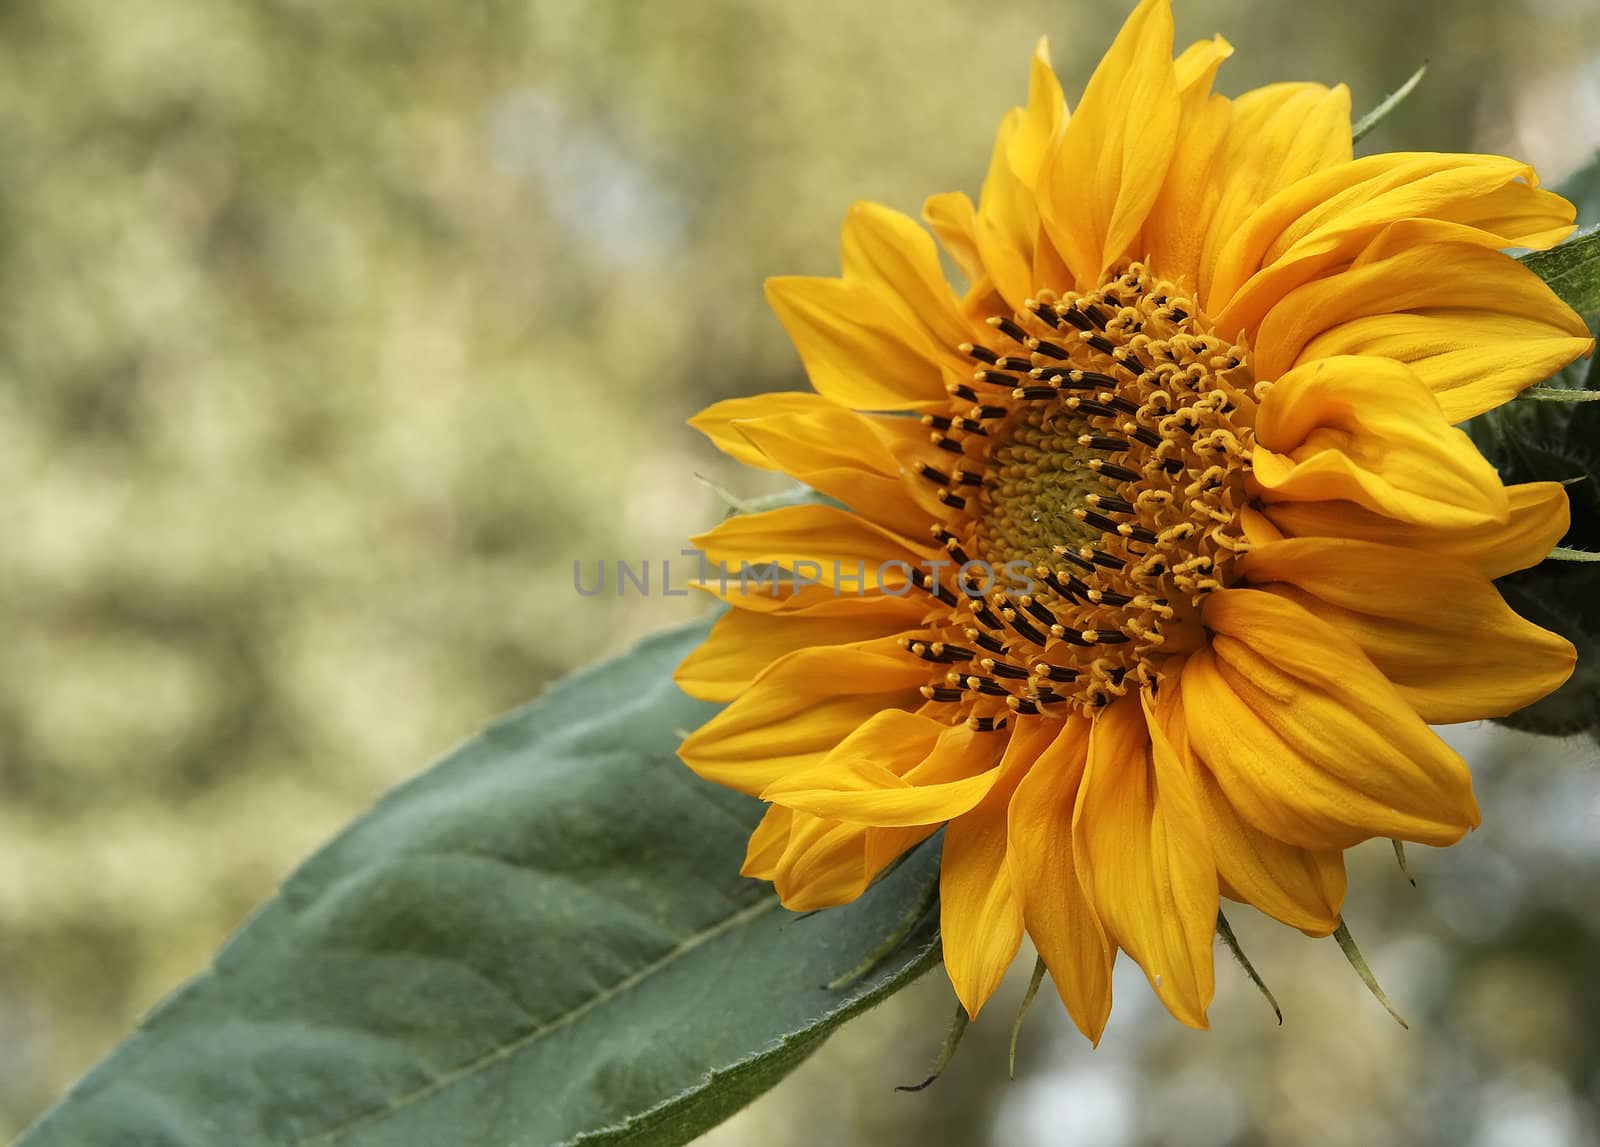 Beautiful sunflower in the sunlight by serpl